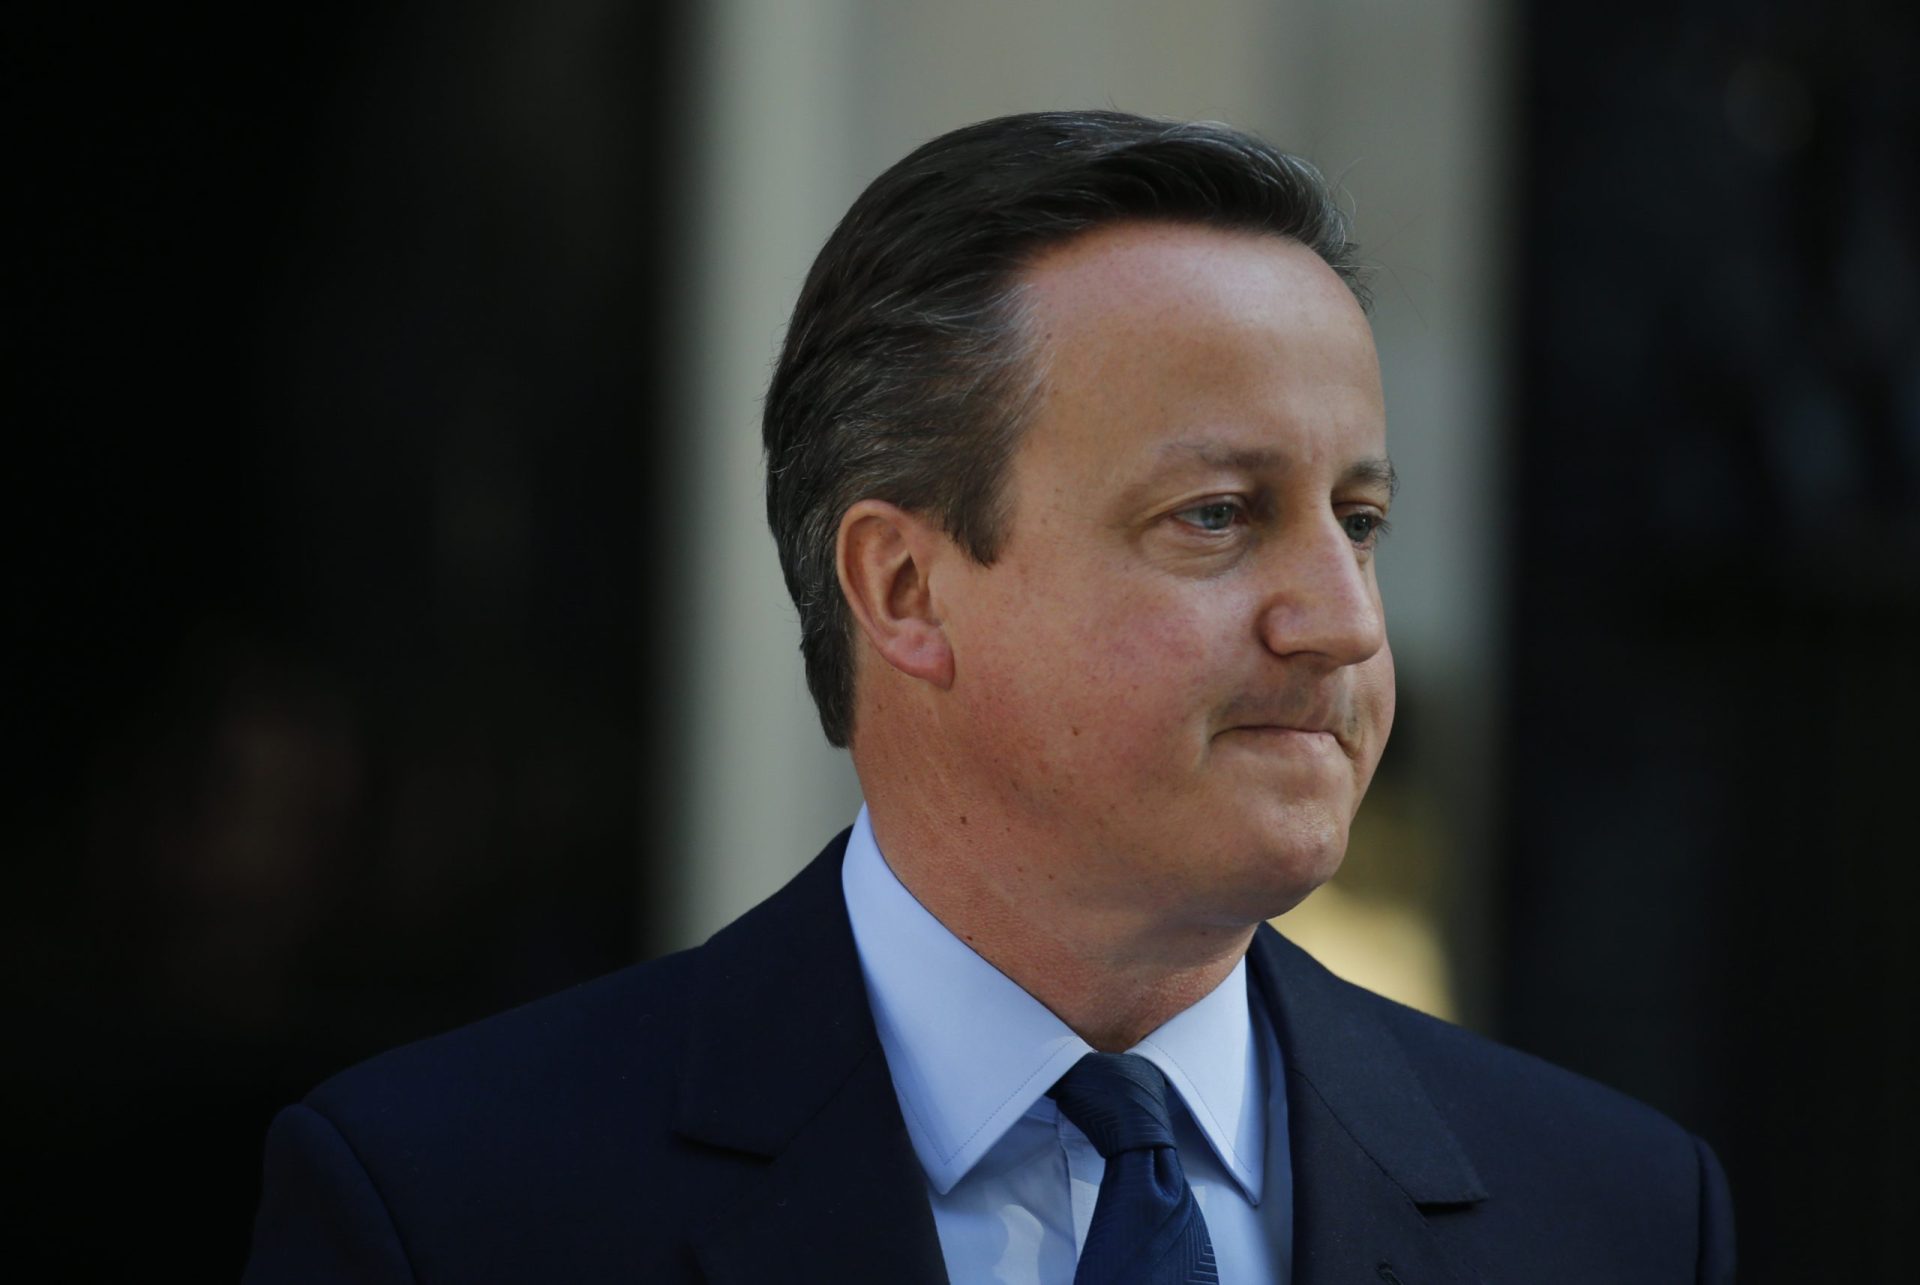 Brexit: substituto de Cameron será anunciado em setembro